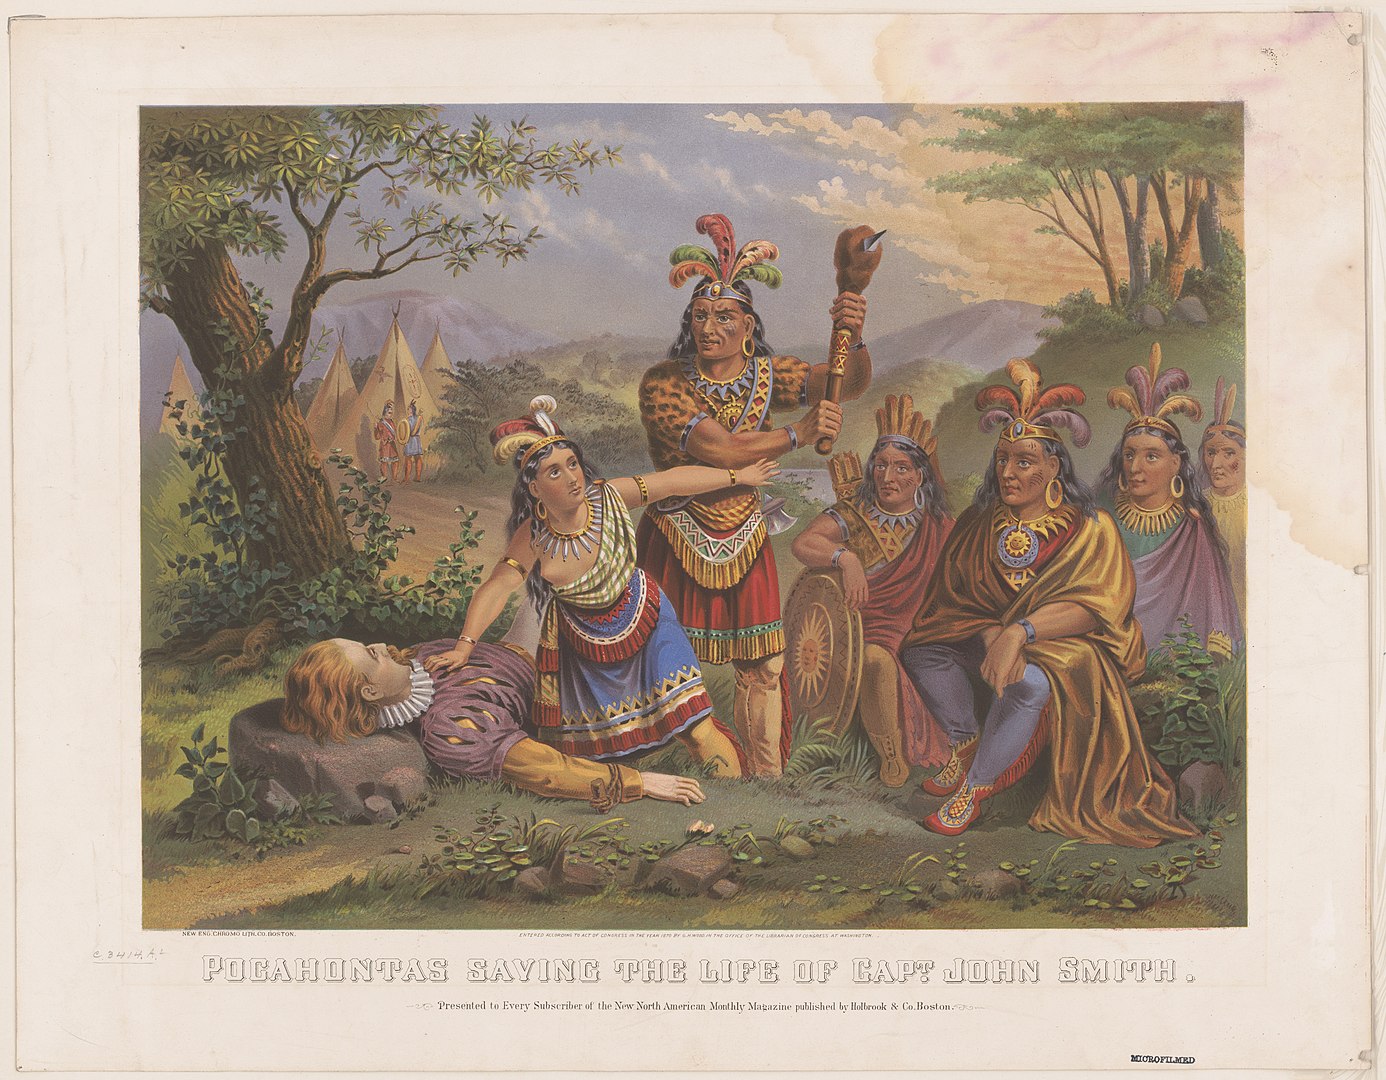 a painting showing Pocahontas saving John Smith